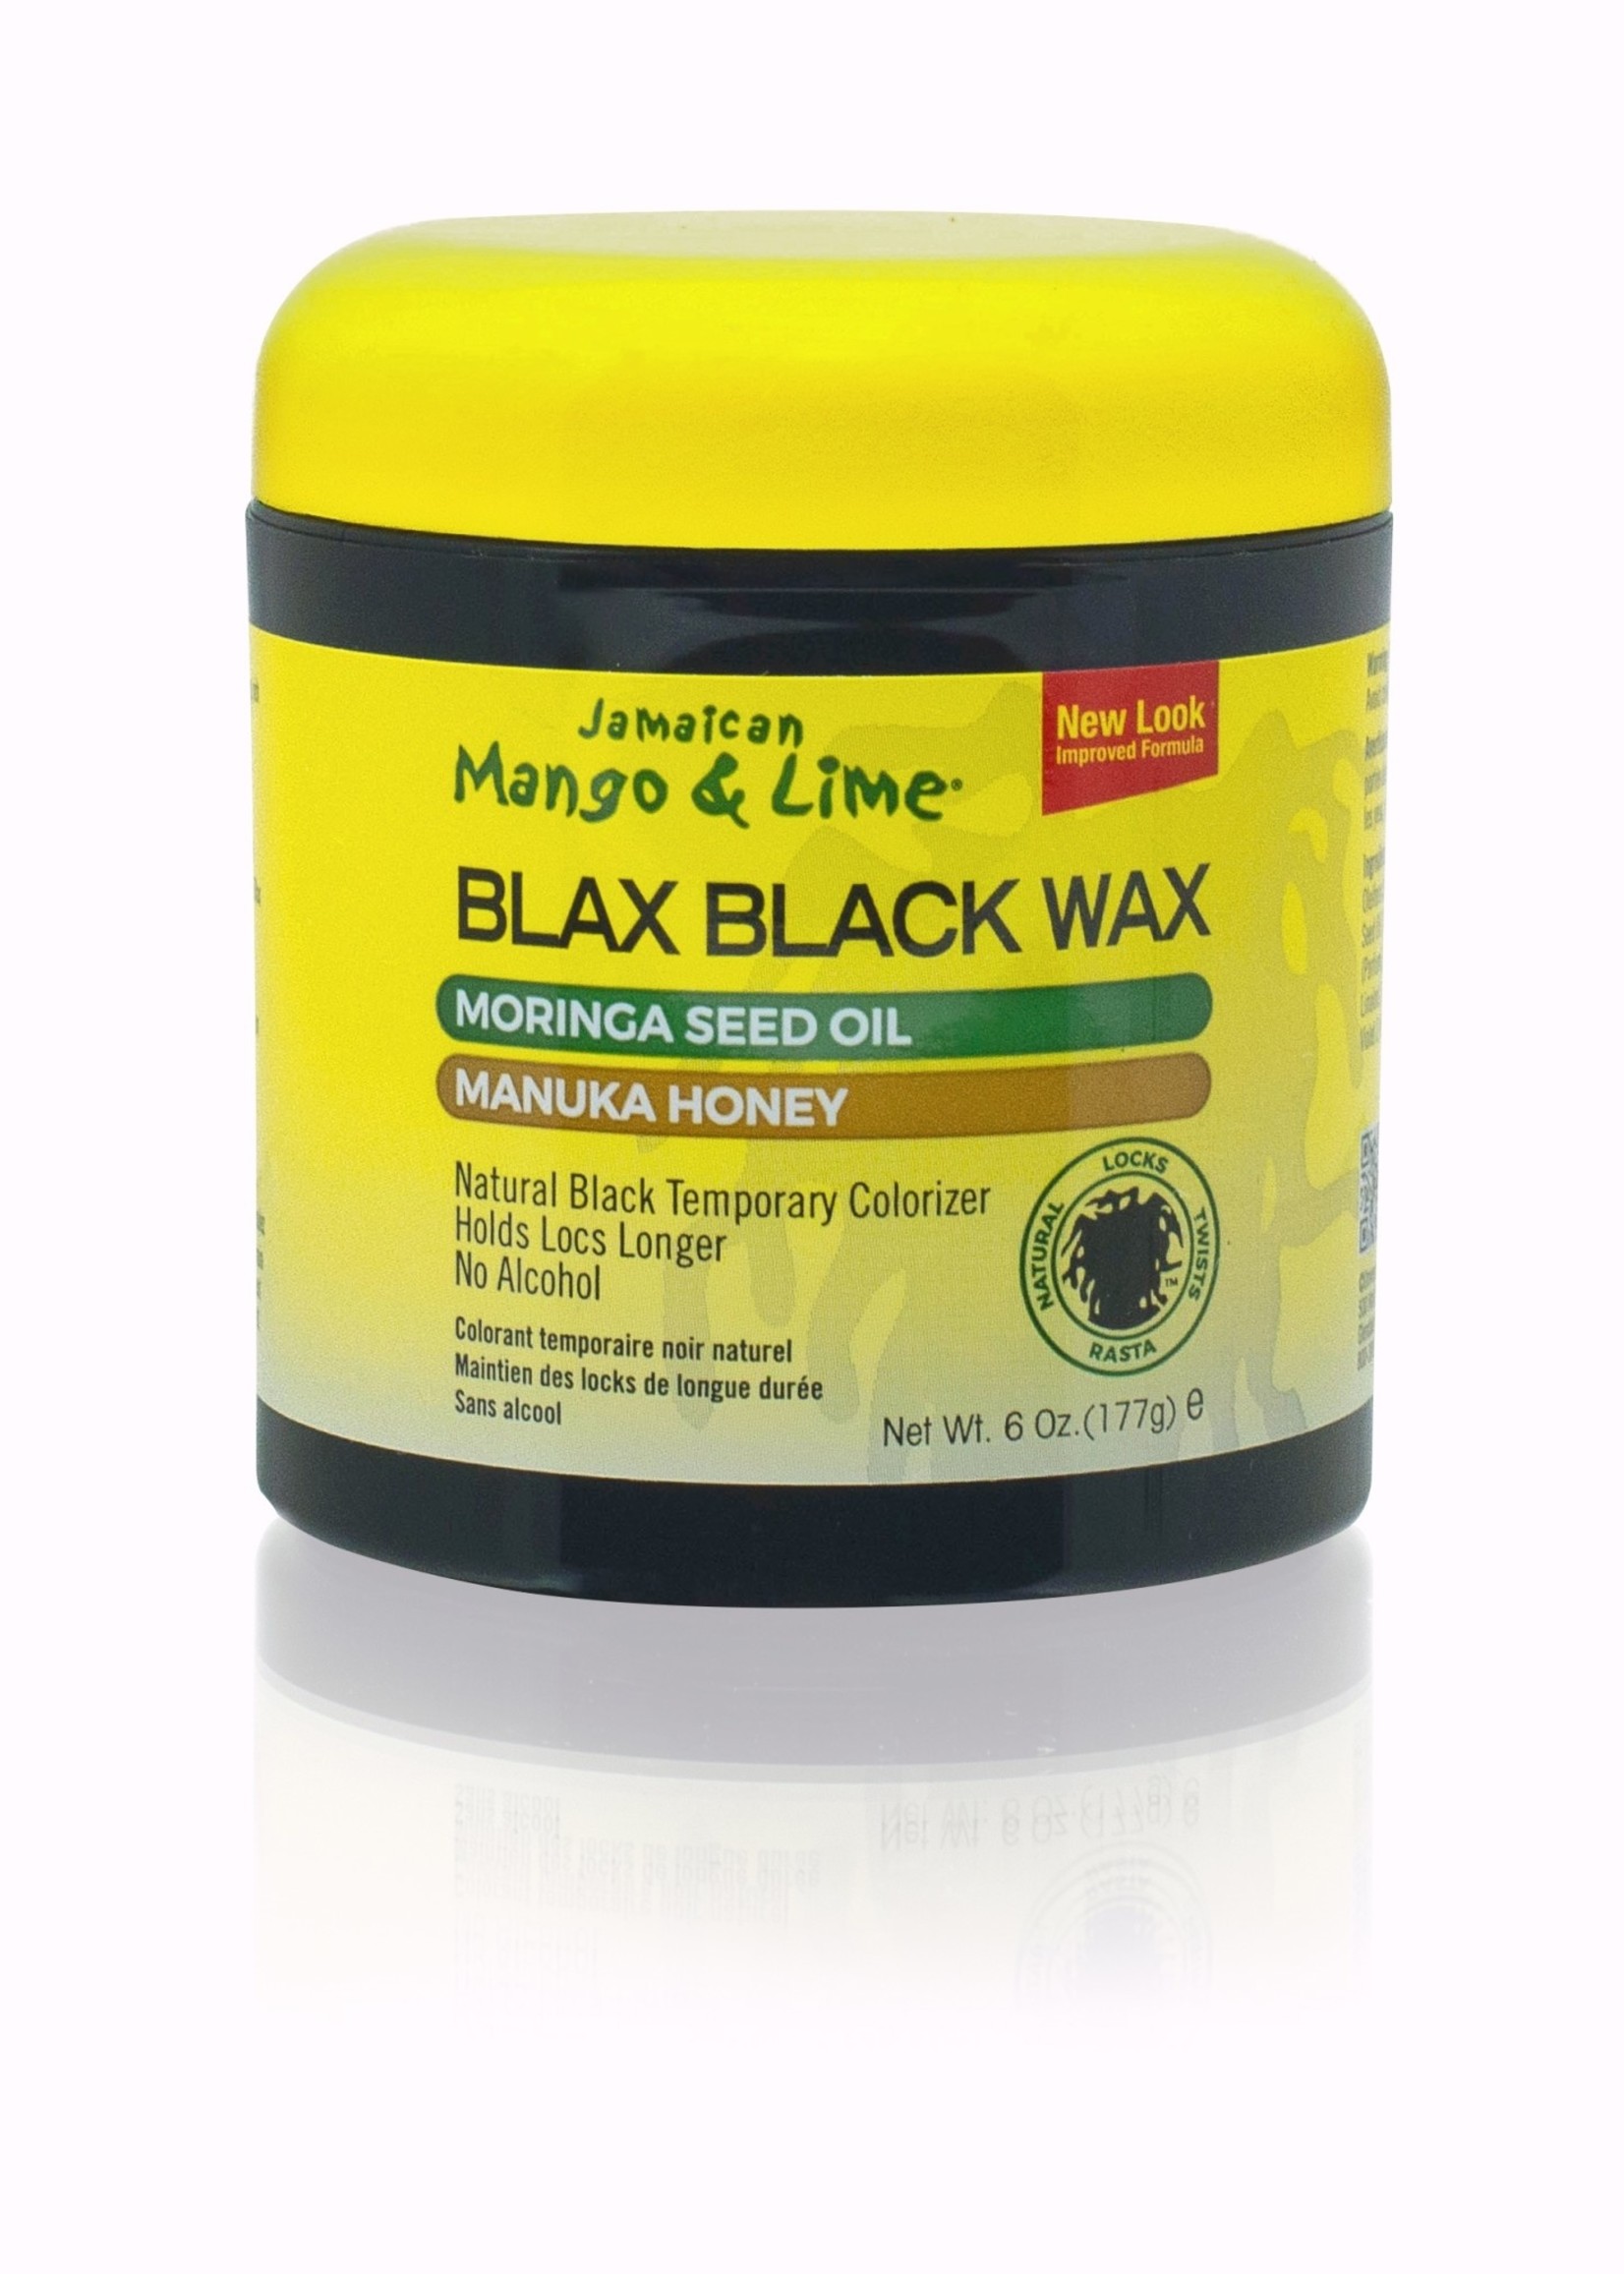 Jamaican Mango & Lime Blax Black Wax